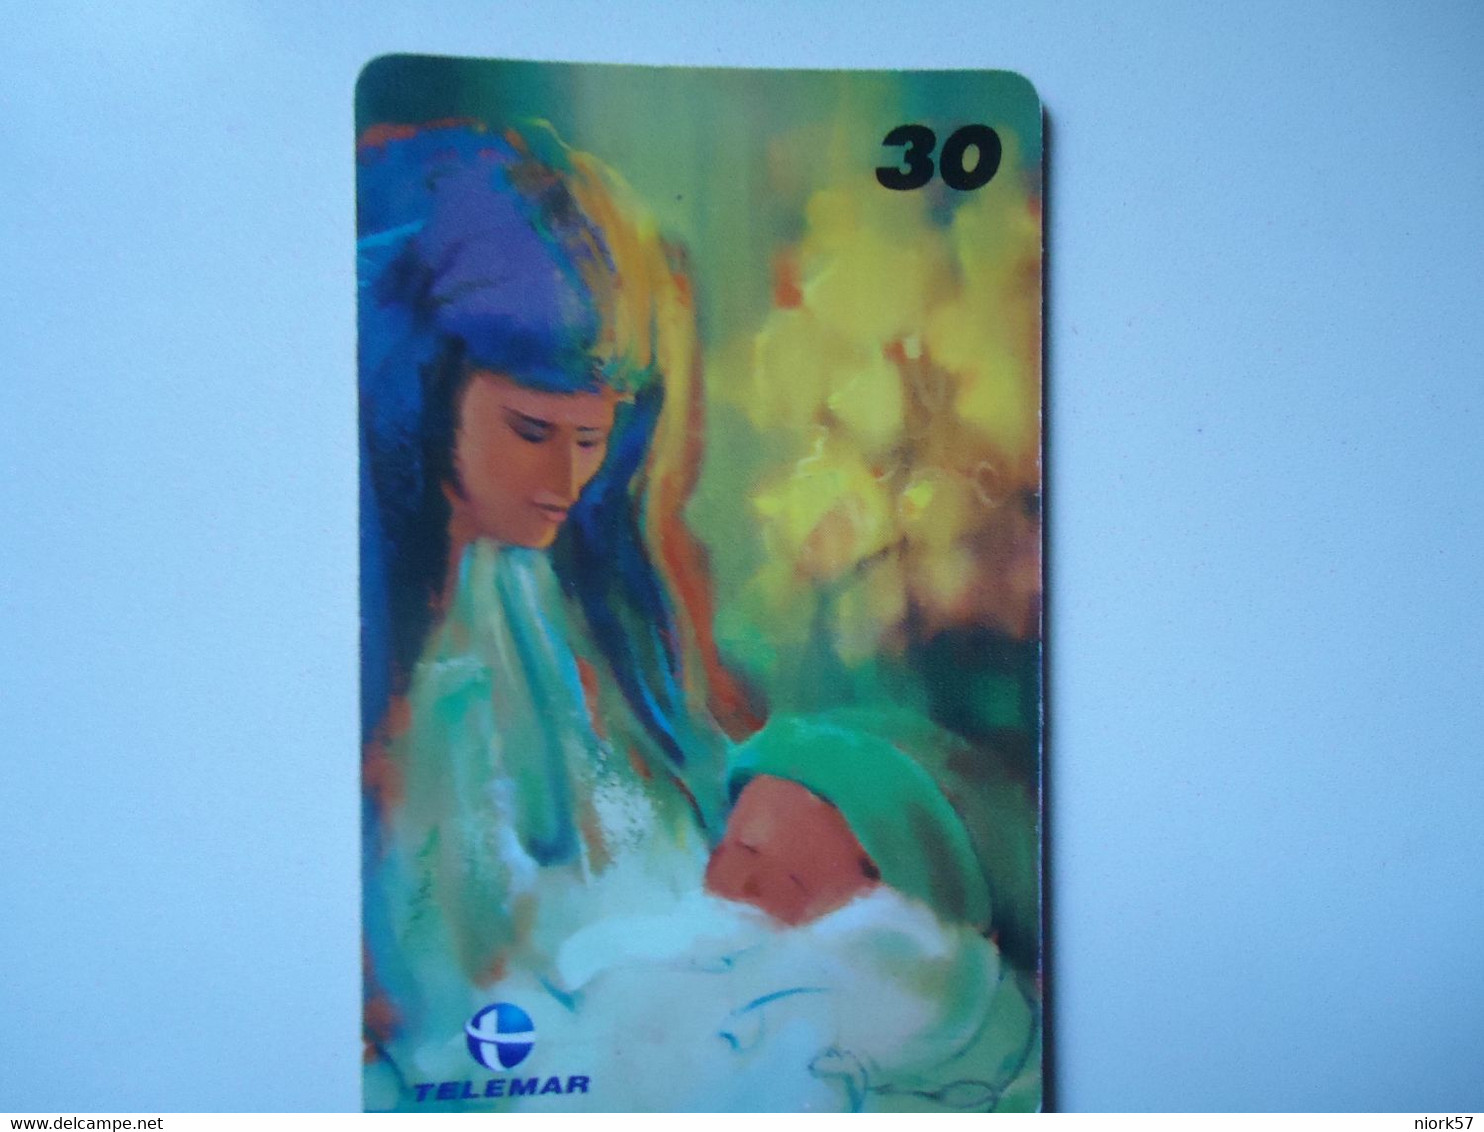 BRAZIL   USED CARDS   PAINTING  ART MUSEUM - Peinture